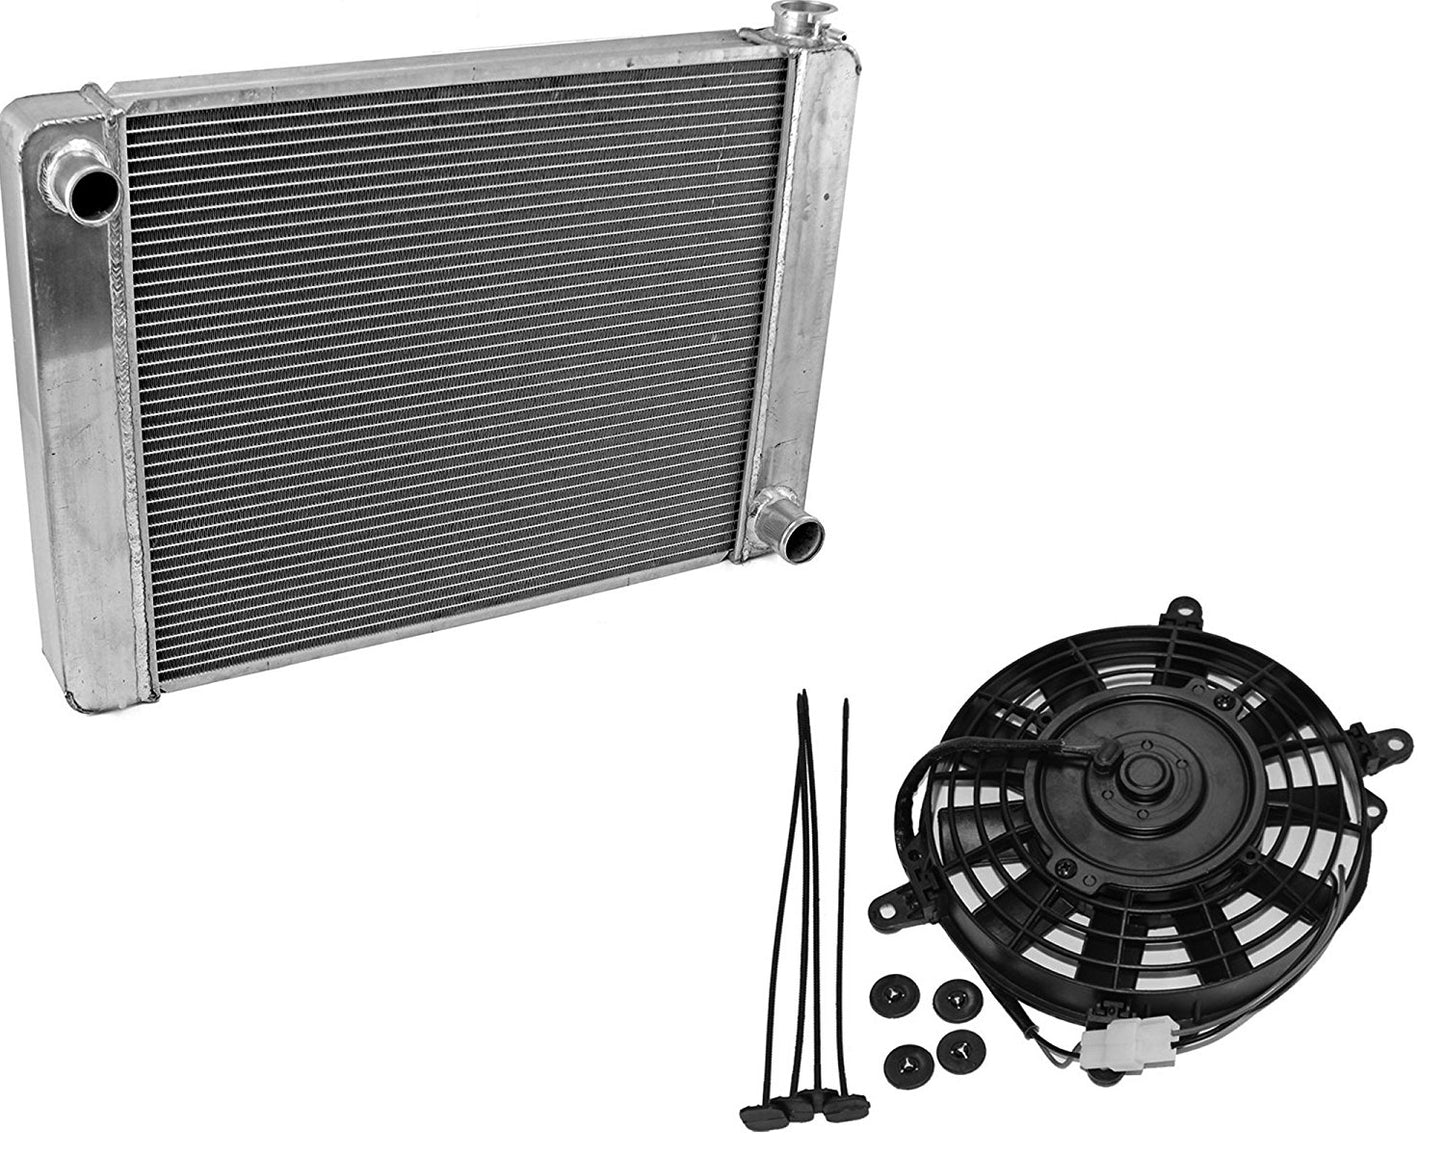 For SBC BBC Chevy GM Fabricated Aluminum Radiator 22" x 19" x3" & 8" Heavy Duty Electric Radator Cooling Fan